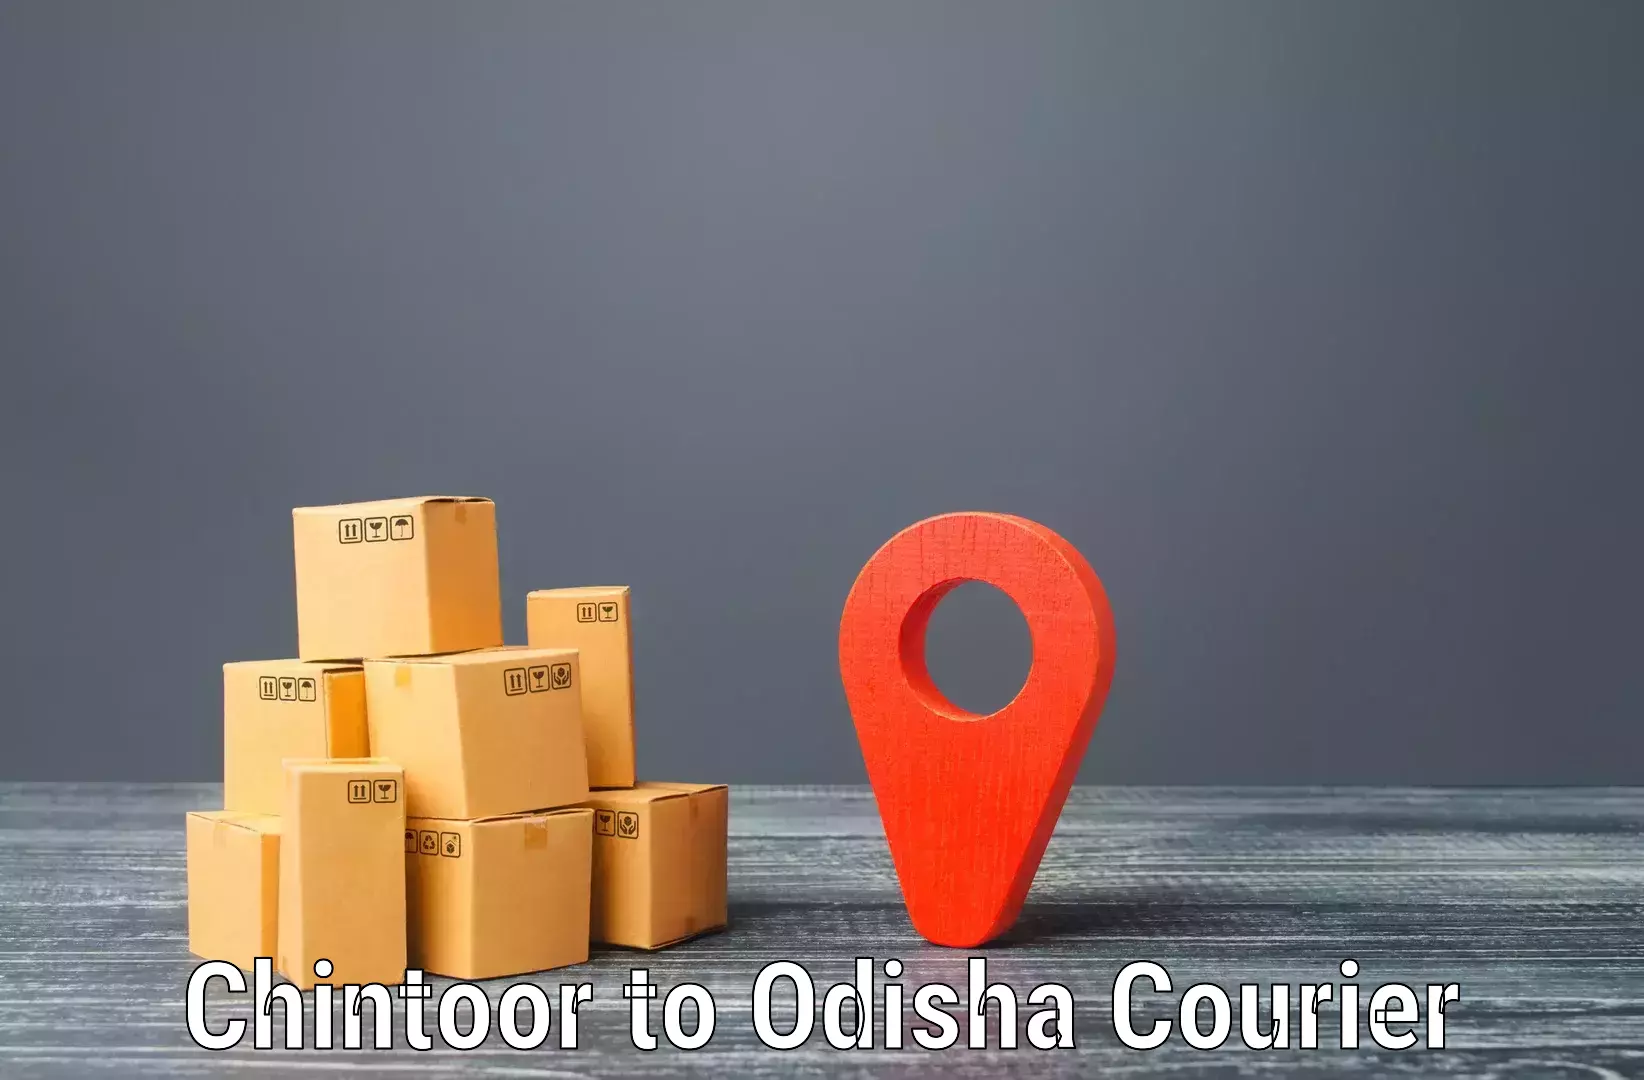 Logistics service provider Chintoor to Jaipatna